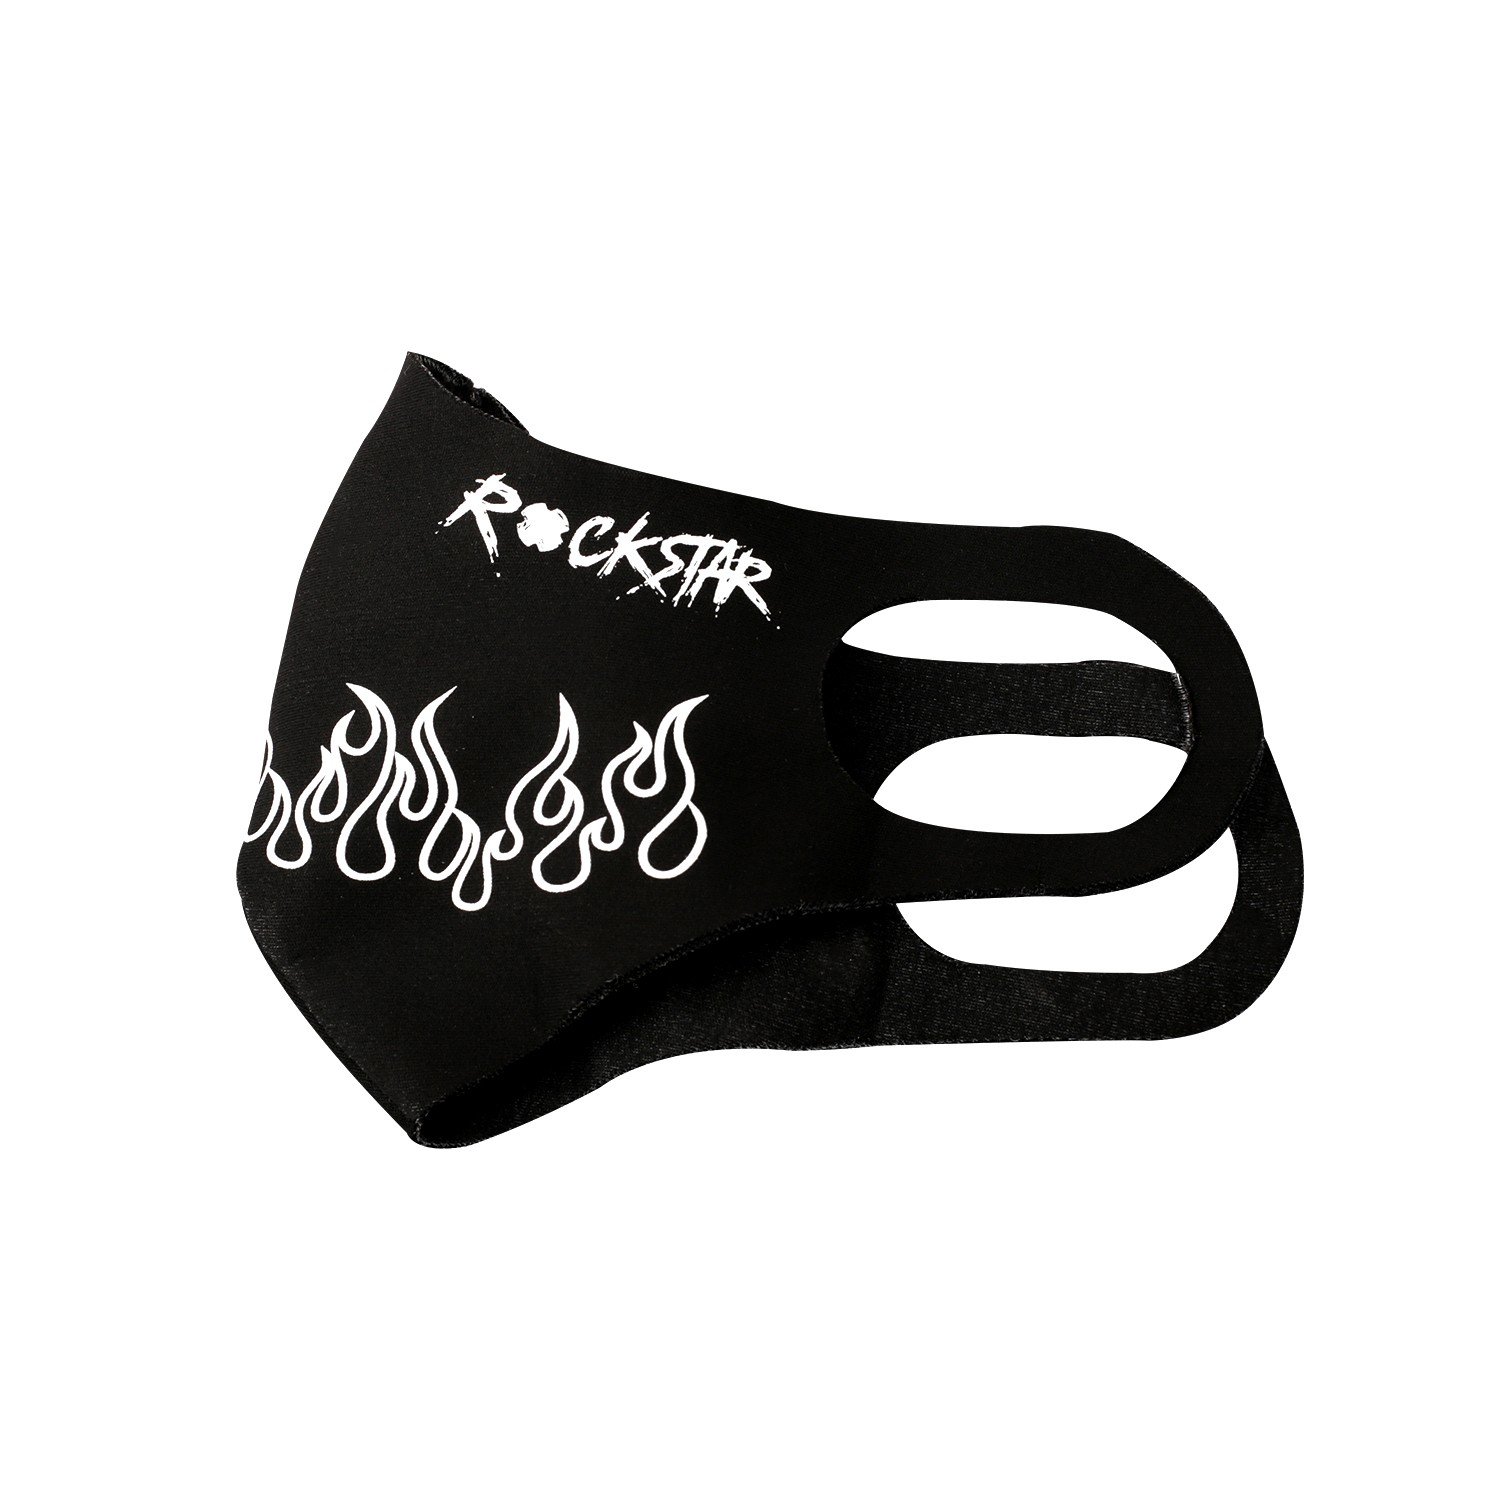 Защитная маска HookahPlace Rockstar